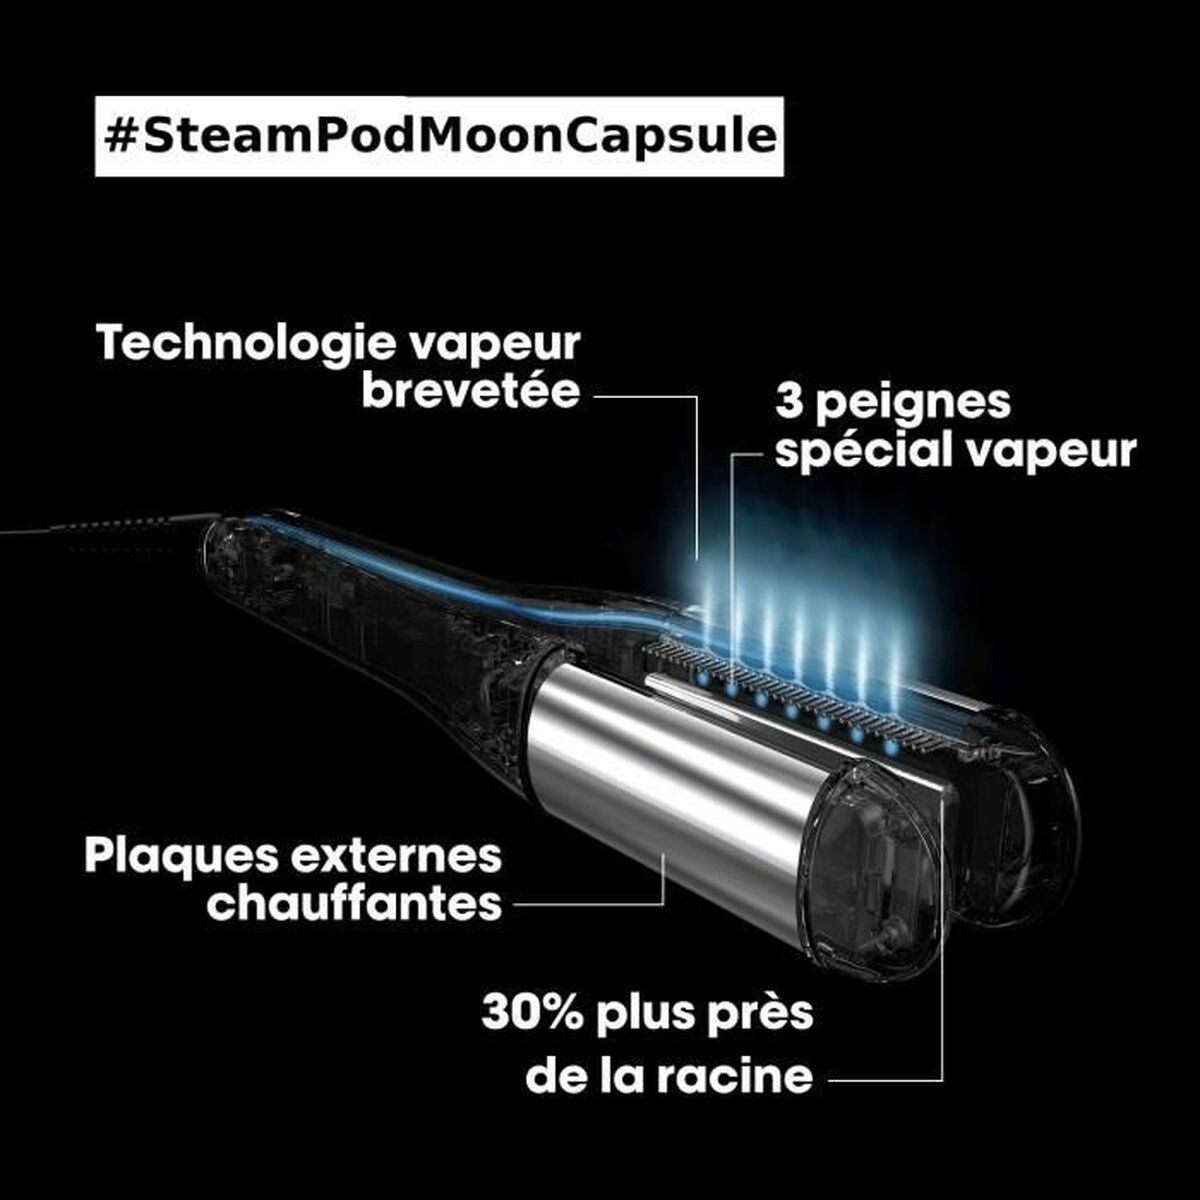 Kaufe Glätteisen L'Oreal Professionnel Paris Steampod 4.0 Limited Edition Moon Capsule bei AWK Flagship um € 477.00